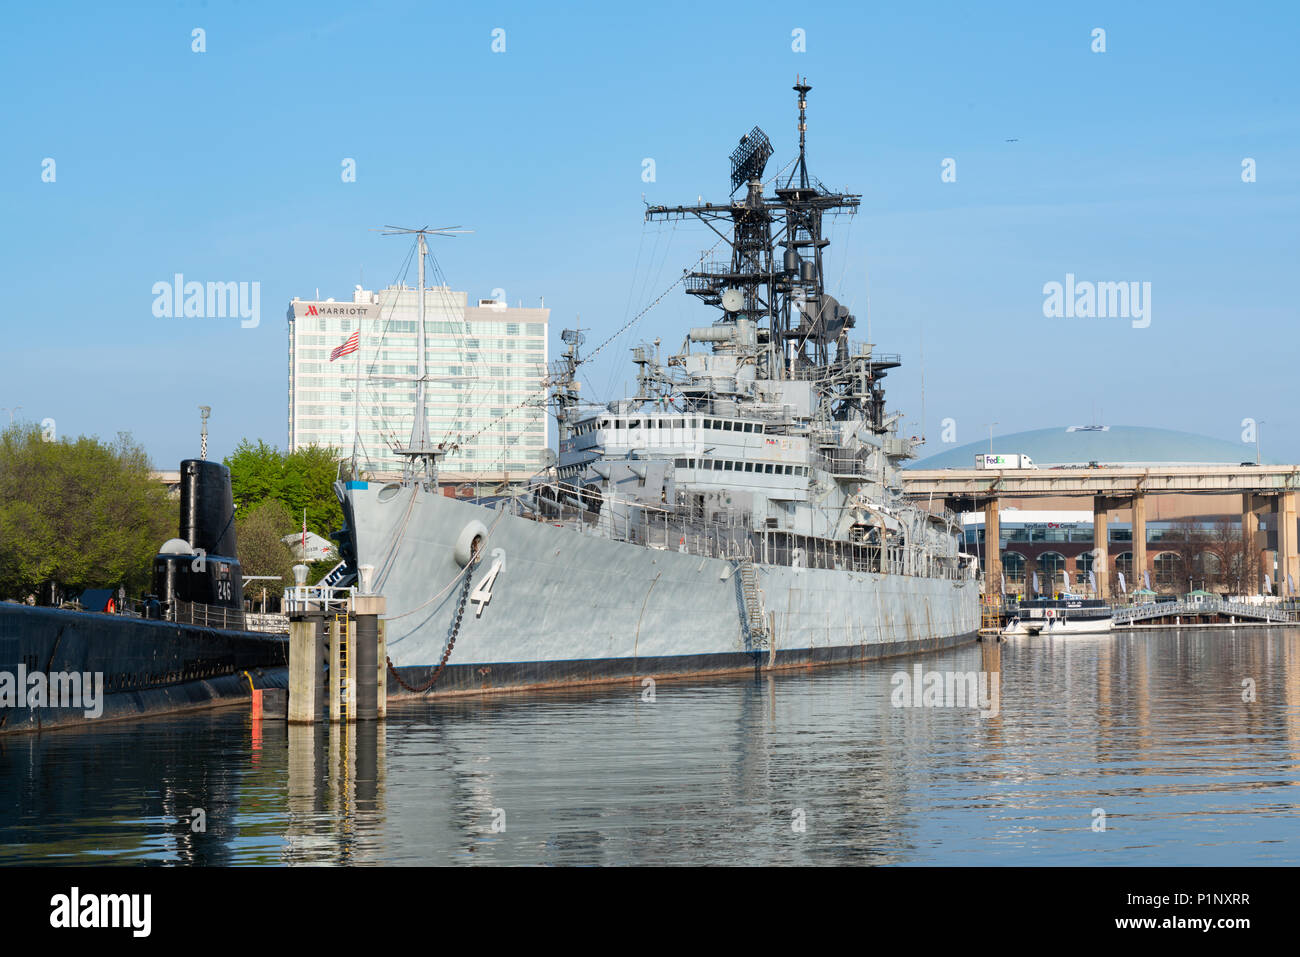 BUFFALO, NY - 15. MAI 2018: Die guided missile Cruiser USS Little Rock am Buffalo and Erie Naval & Military Park in Buffalo New York günstig Stockfoto